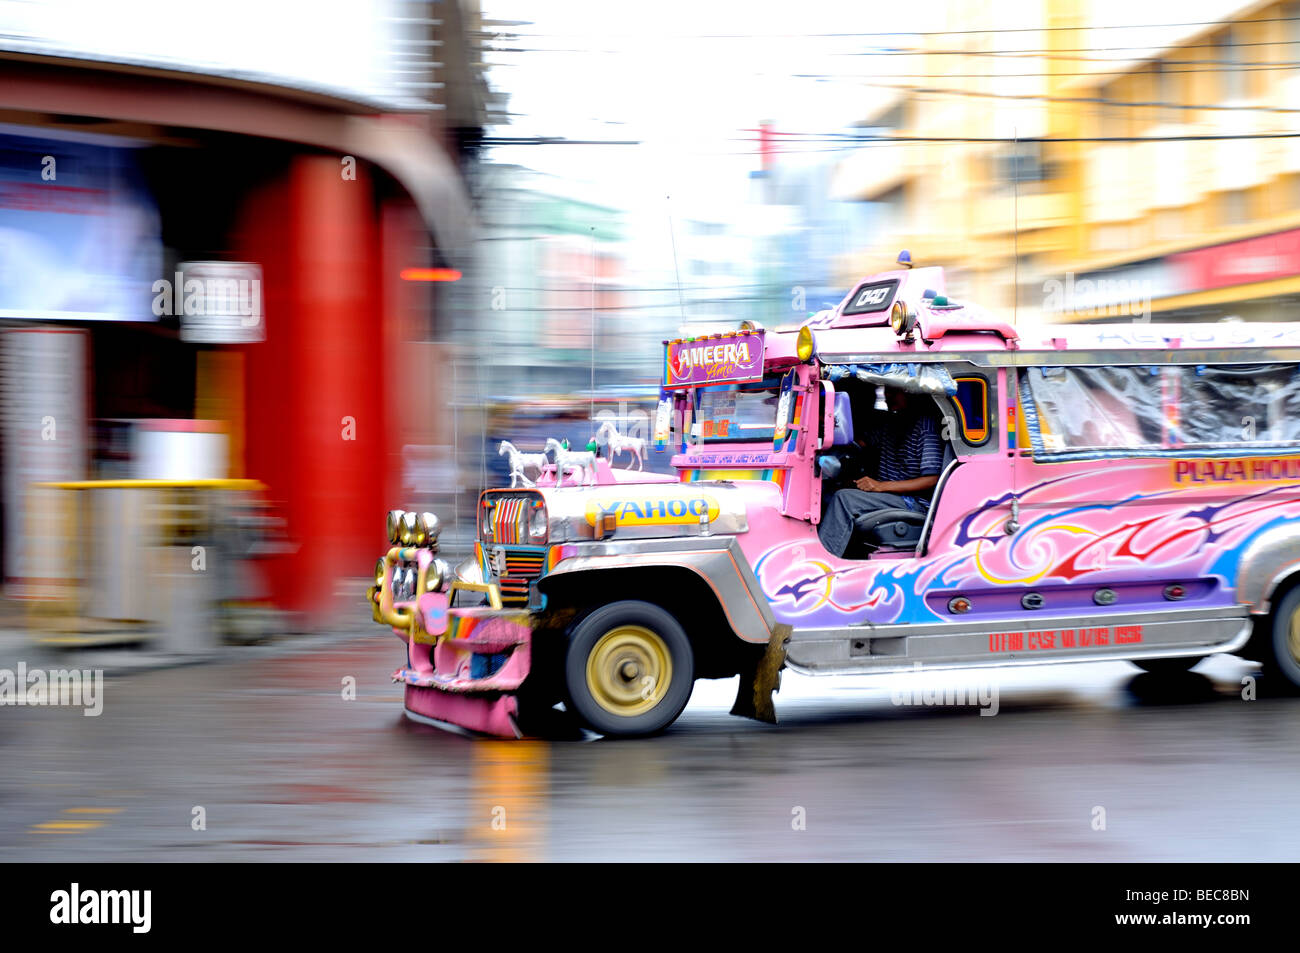 jeepney cagayan de oro, mindanao philippines Stock Photo